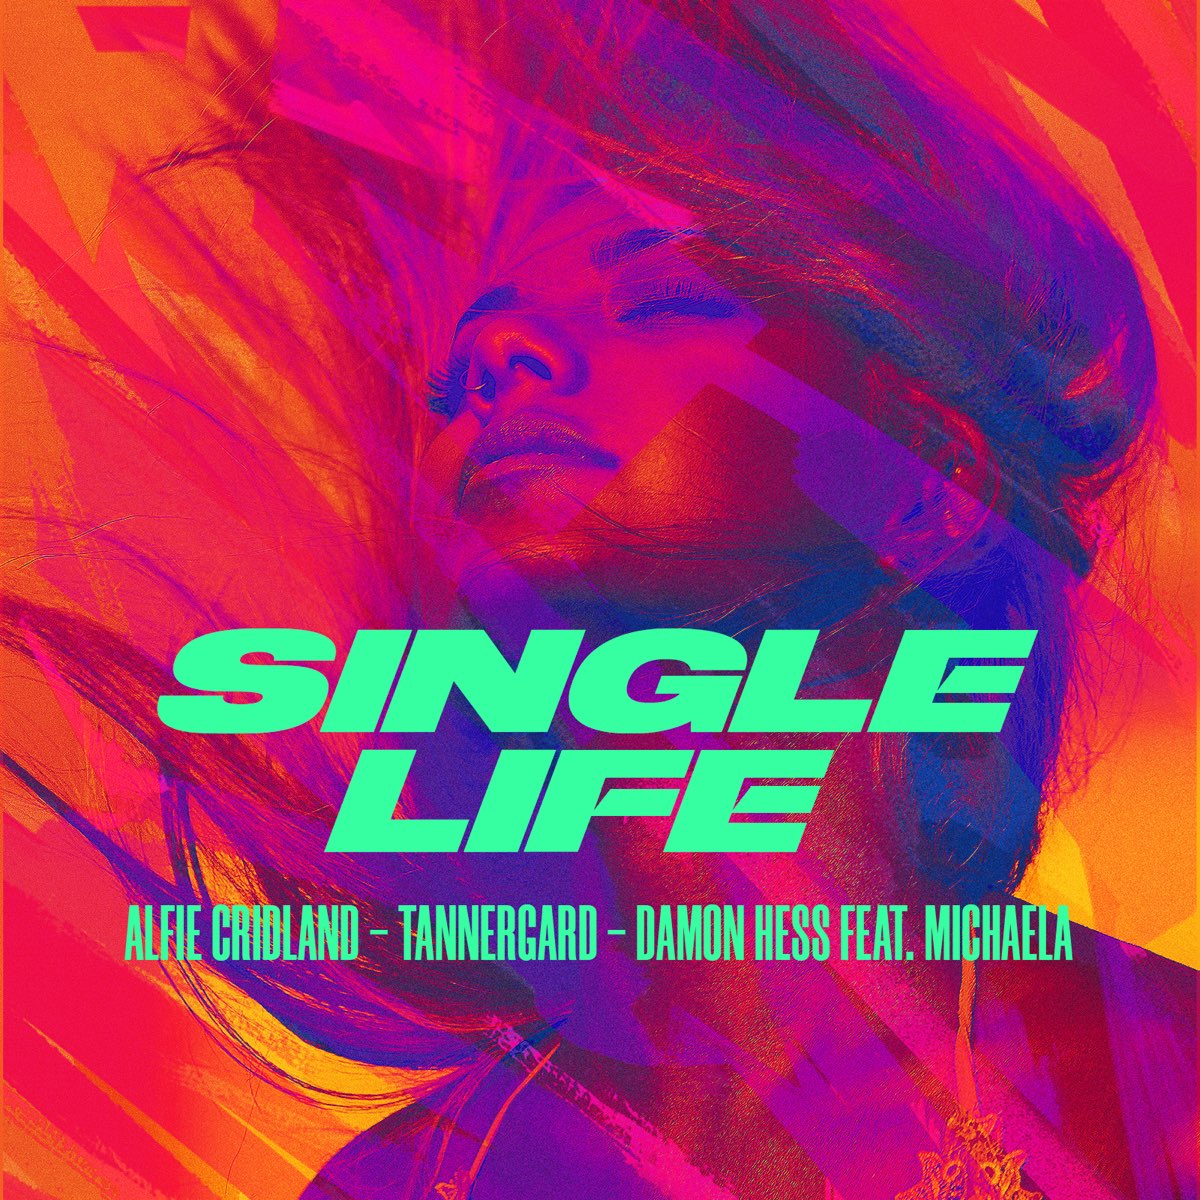 Alfie Cridland, Tannergard, & Damon Hess ft. featuring MICHAELA Single Life cover artwork